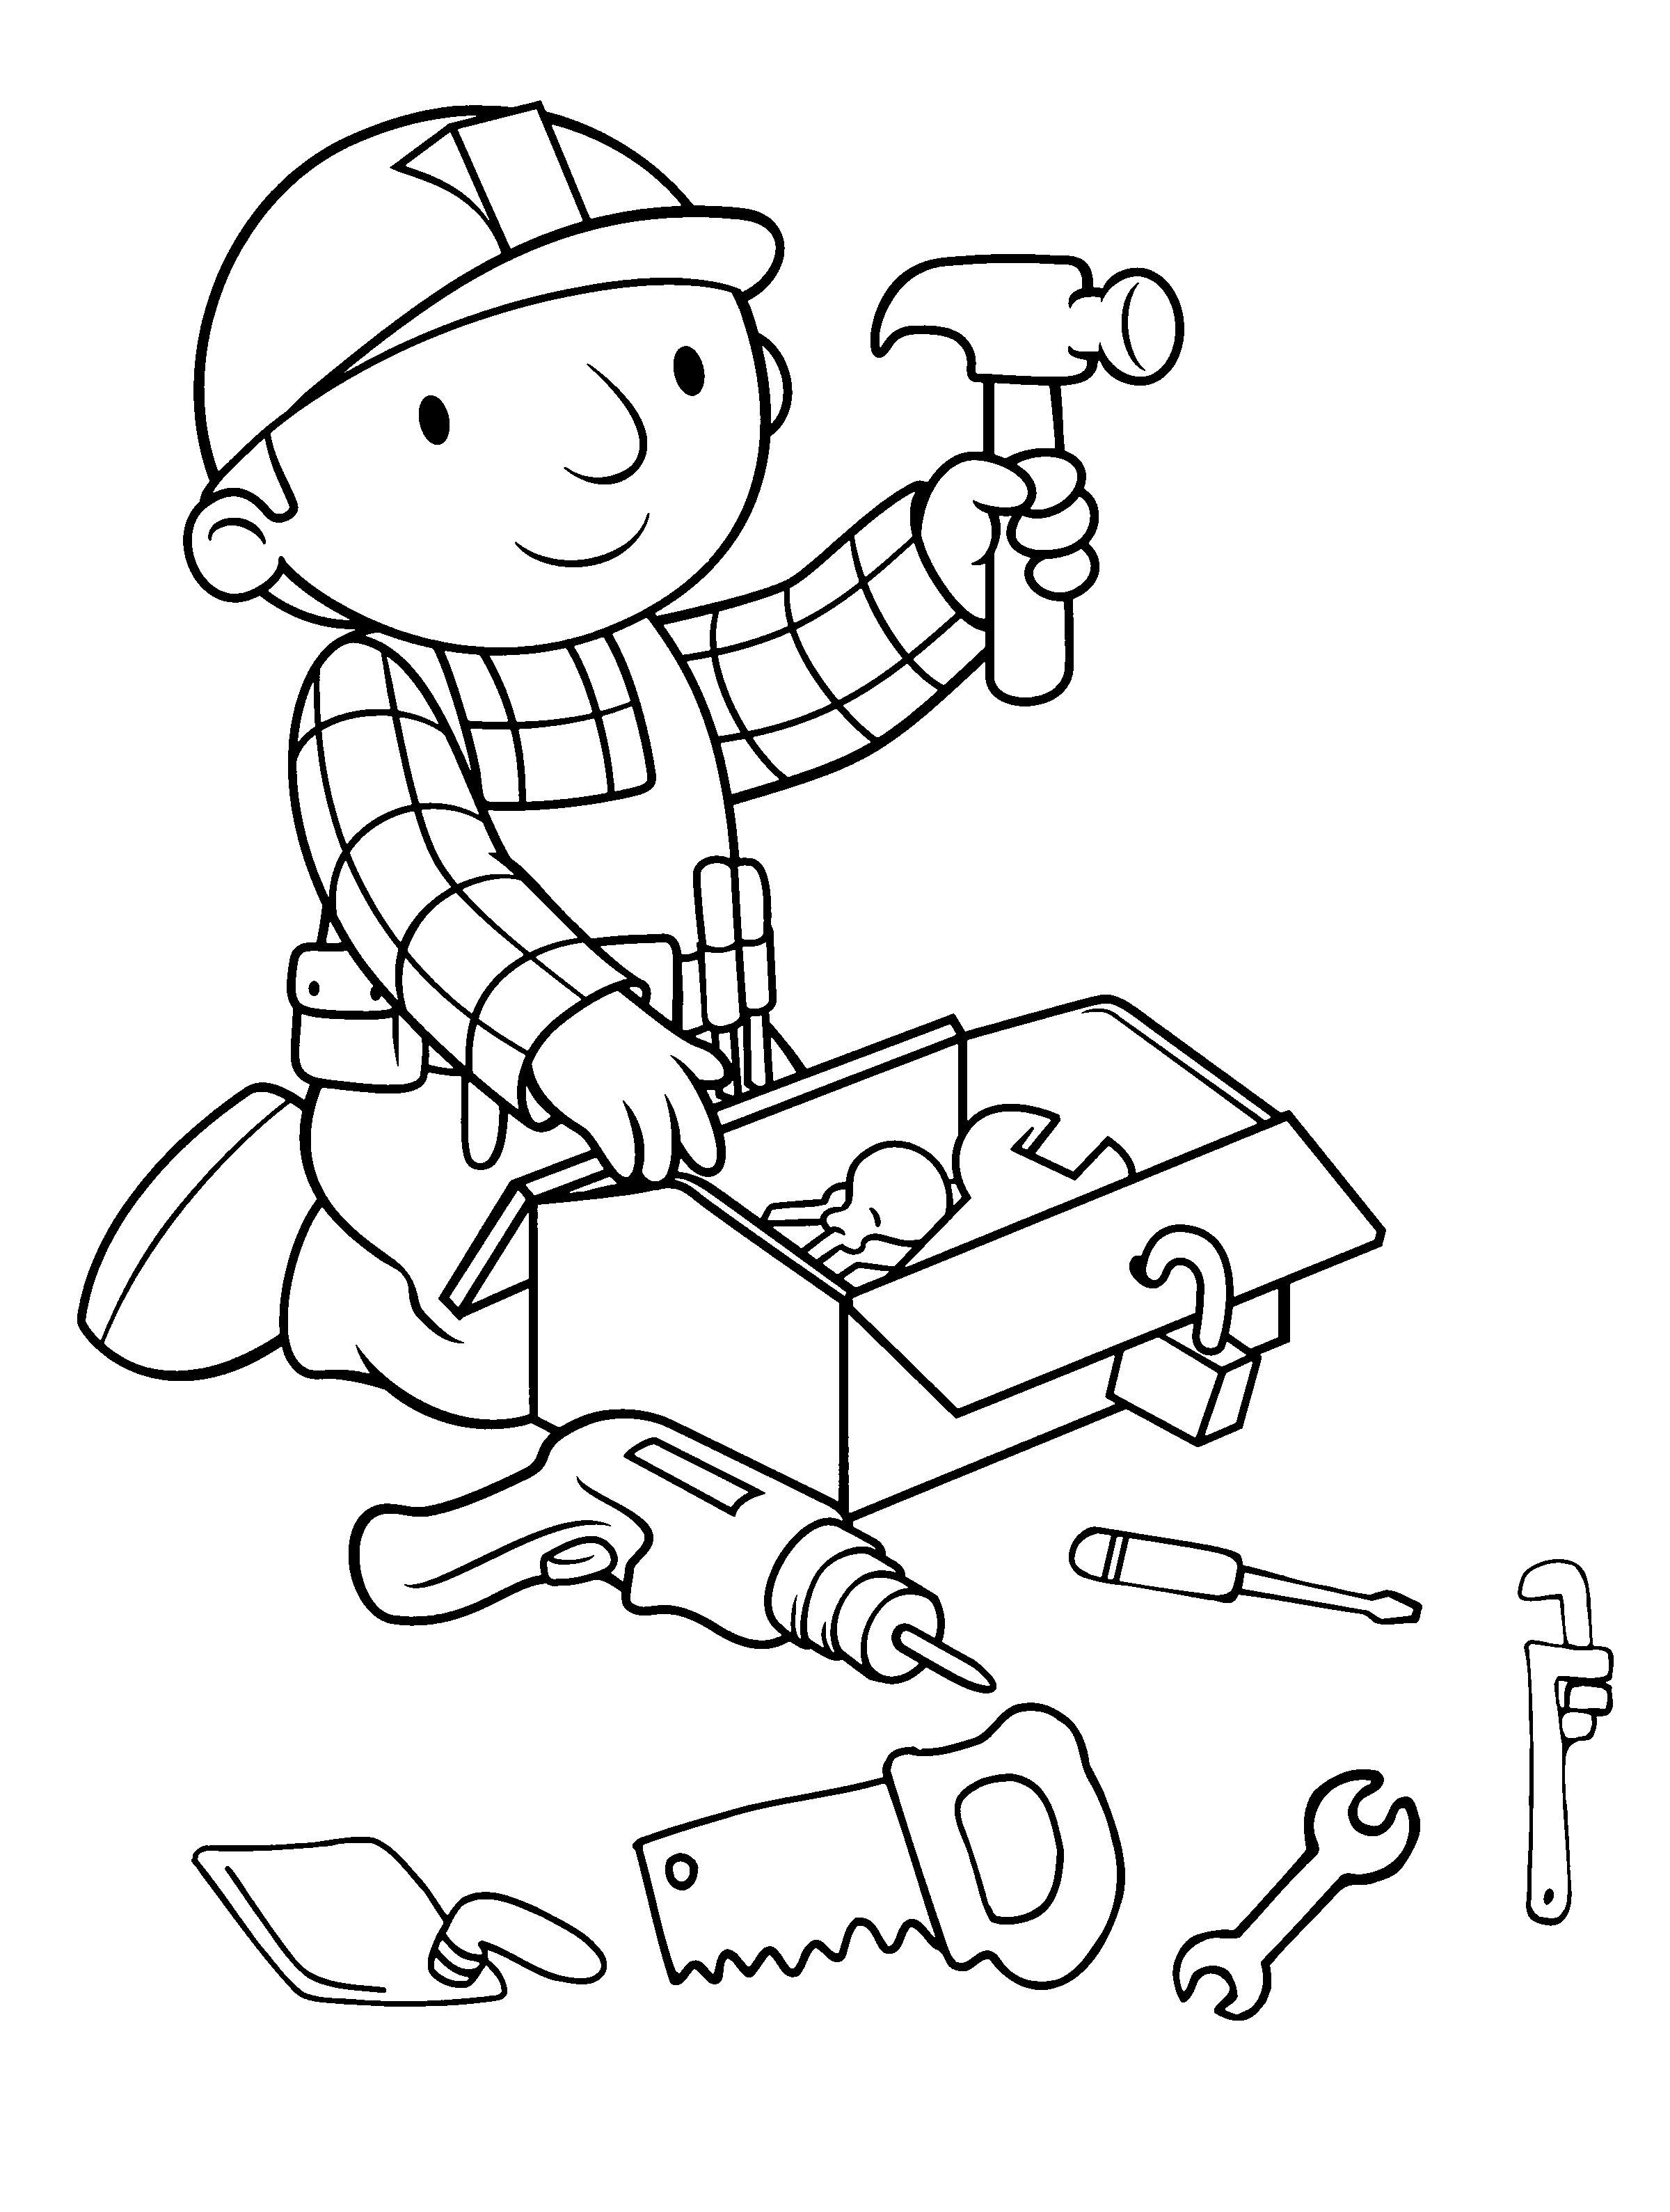 bob the builder coloring page free printable bob the builder coloring pages for kids the builder page coloring bob 